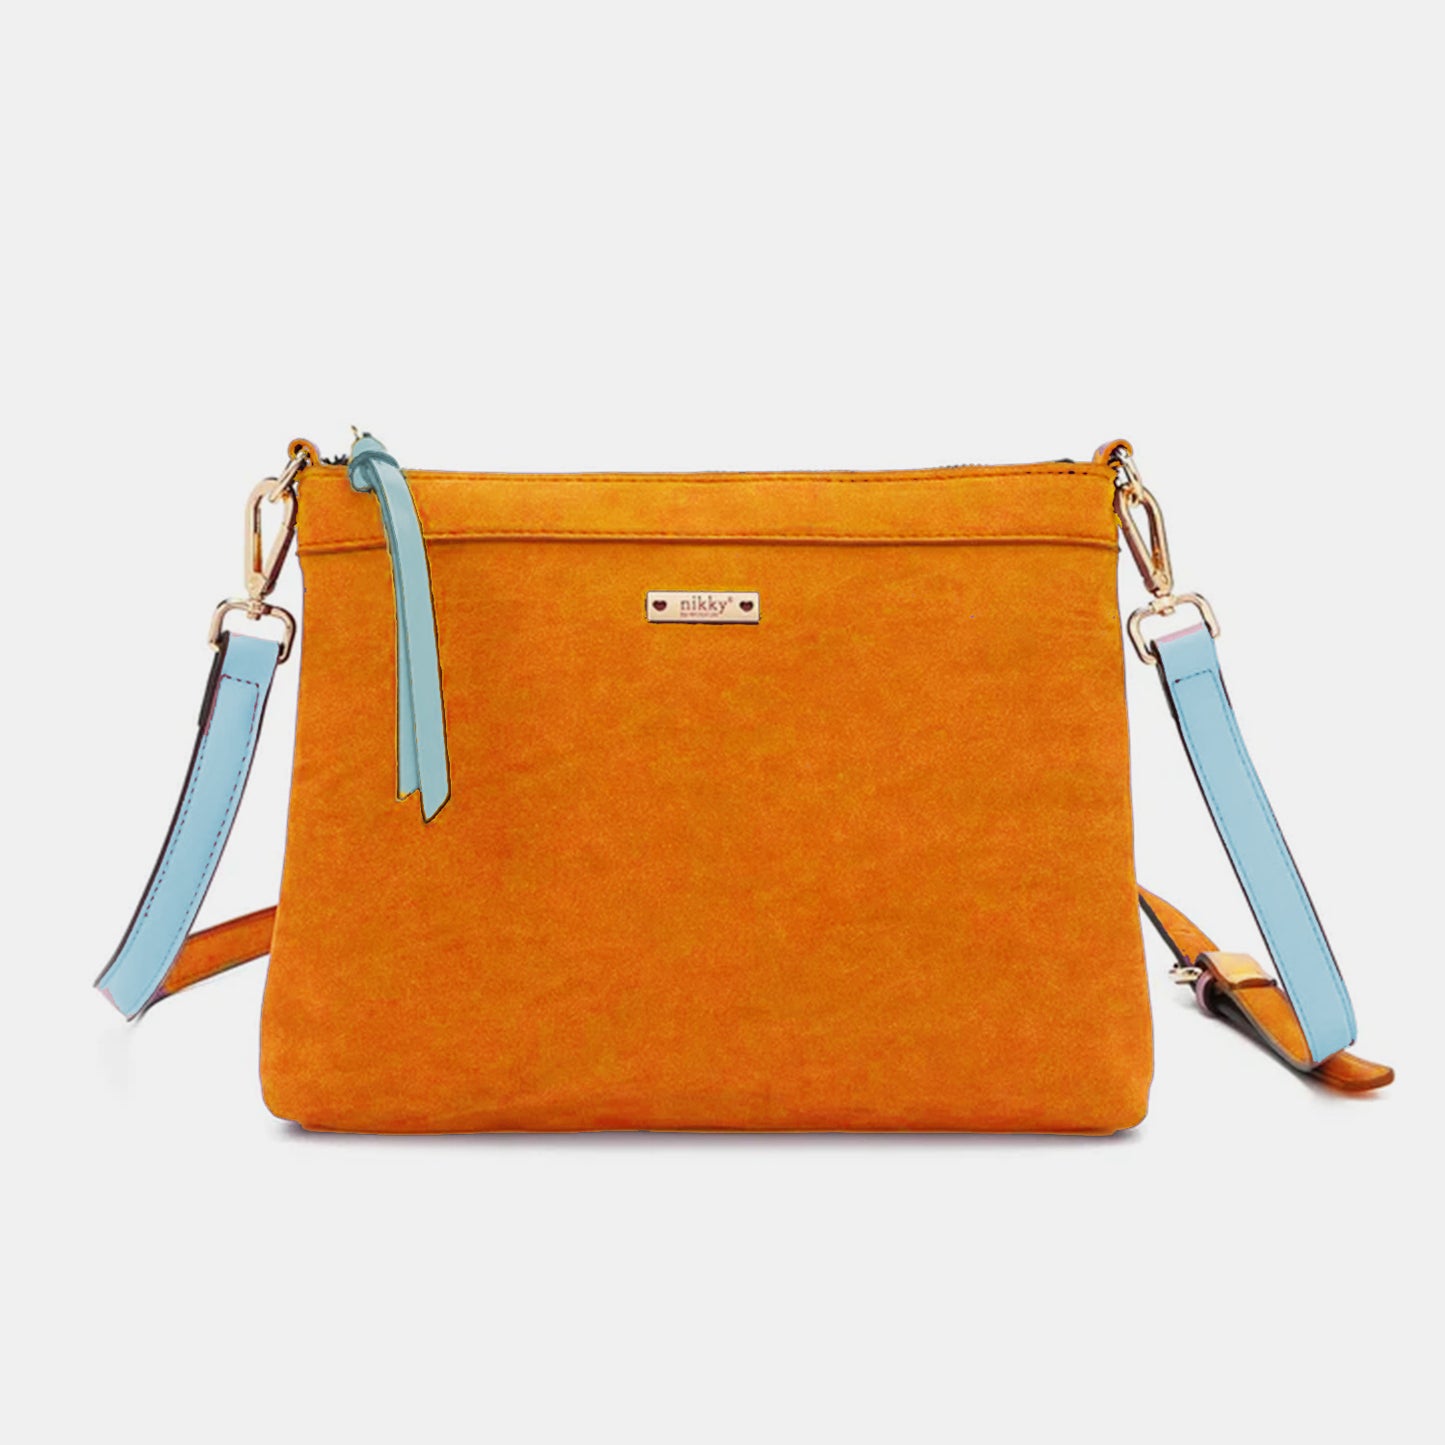 Orange Yellow bag set Nicole Lee USA 3-Piece Handbag Set